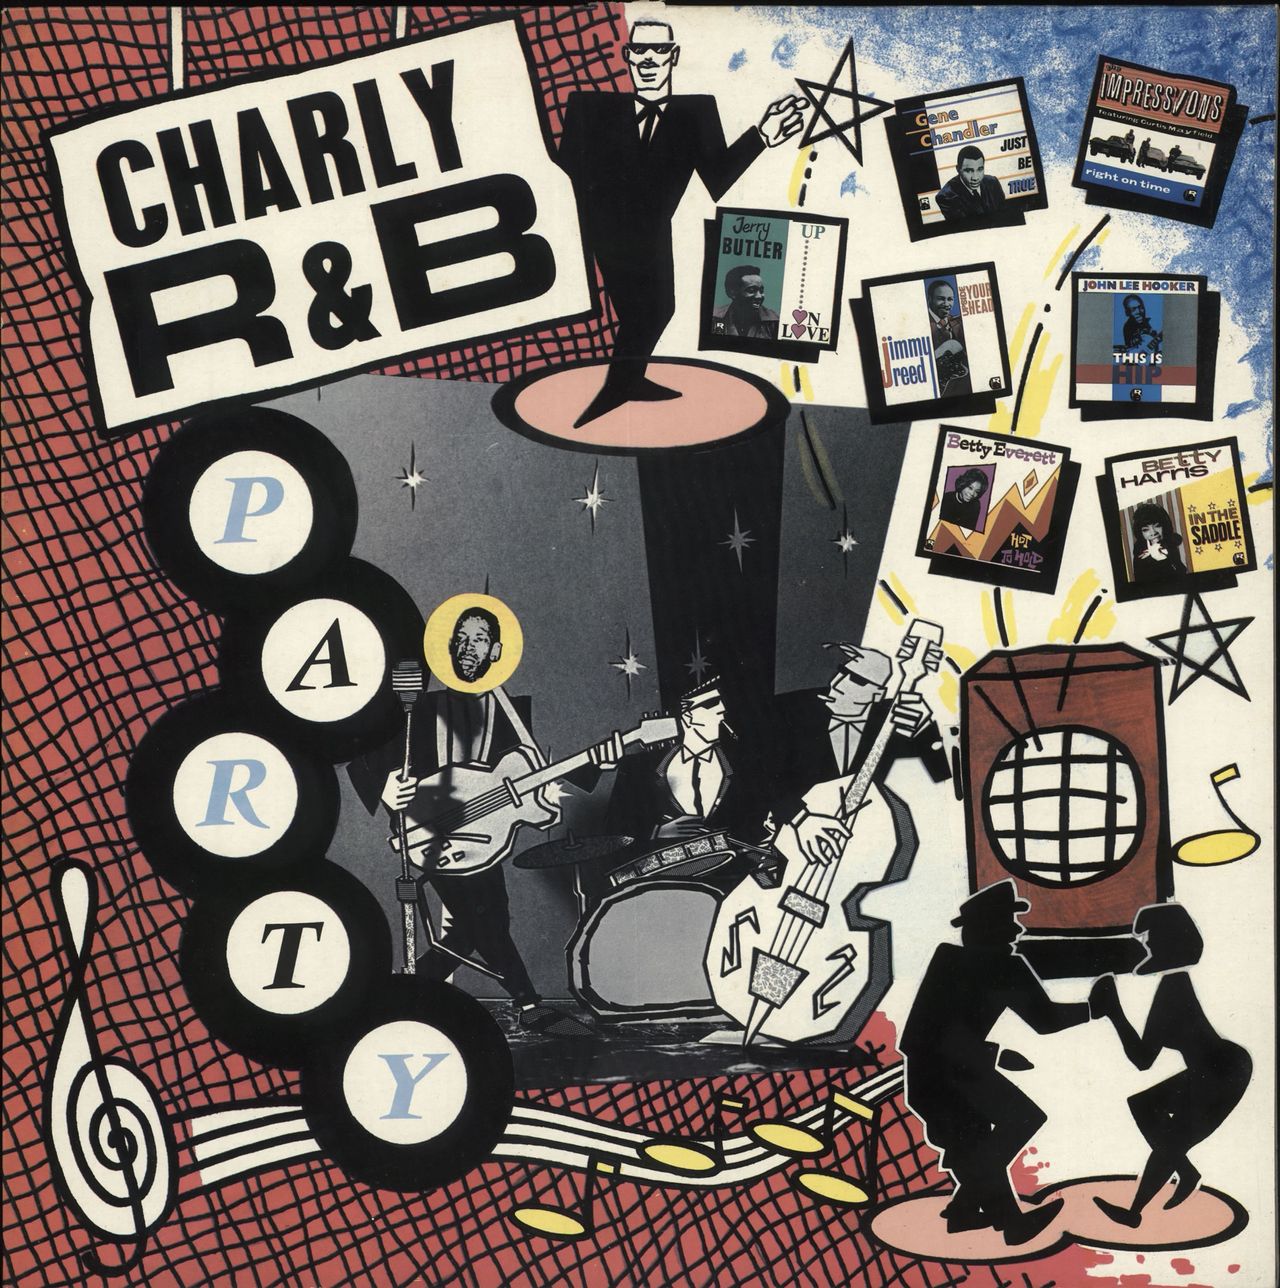 Various-Blues & Gospel Charly R & B Party UK Vinyl LP — RareVinyl.com